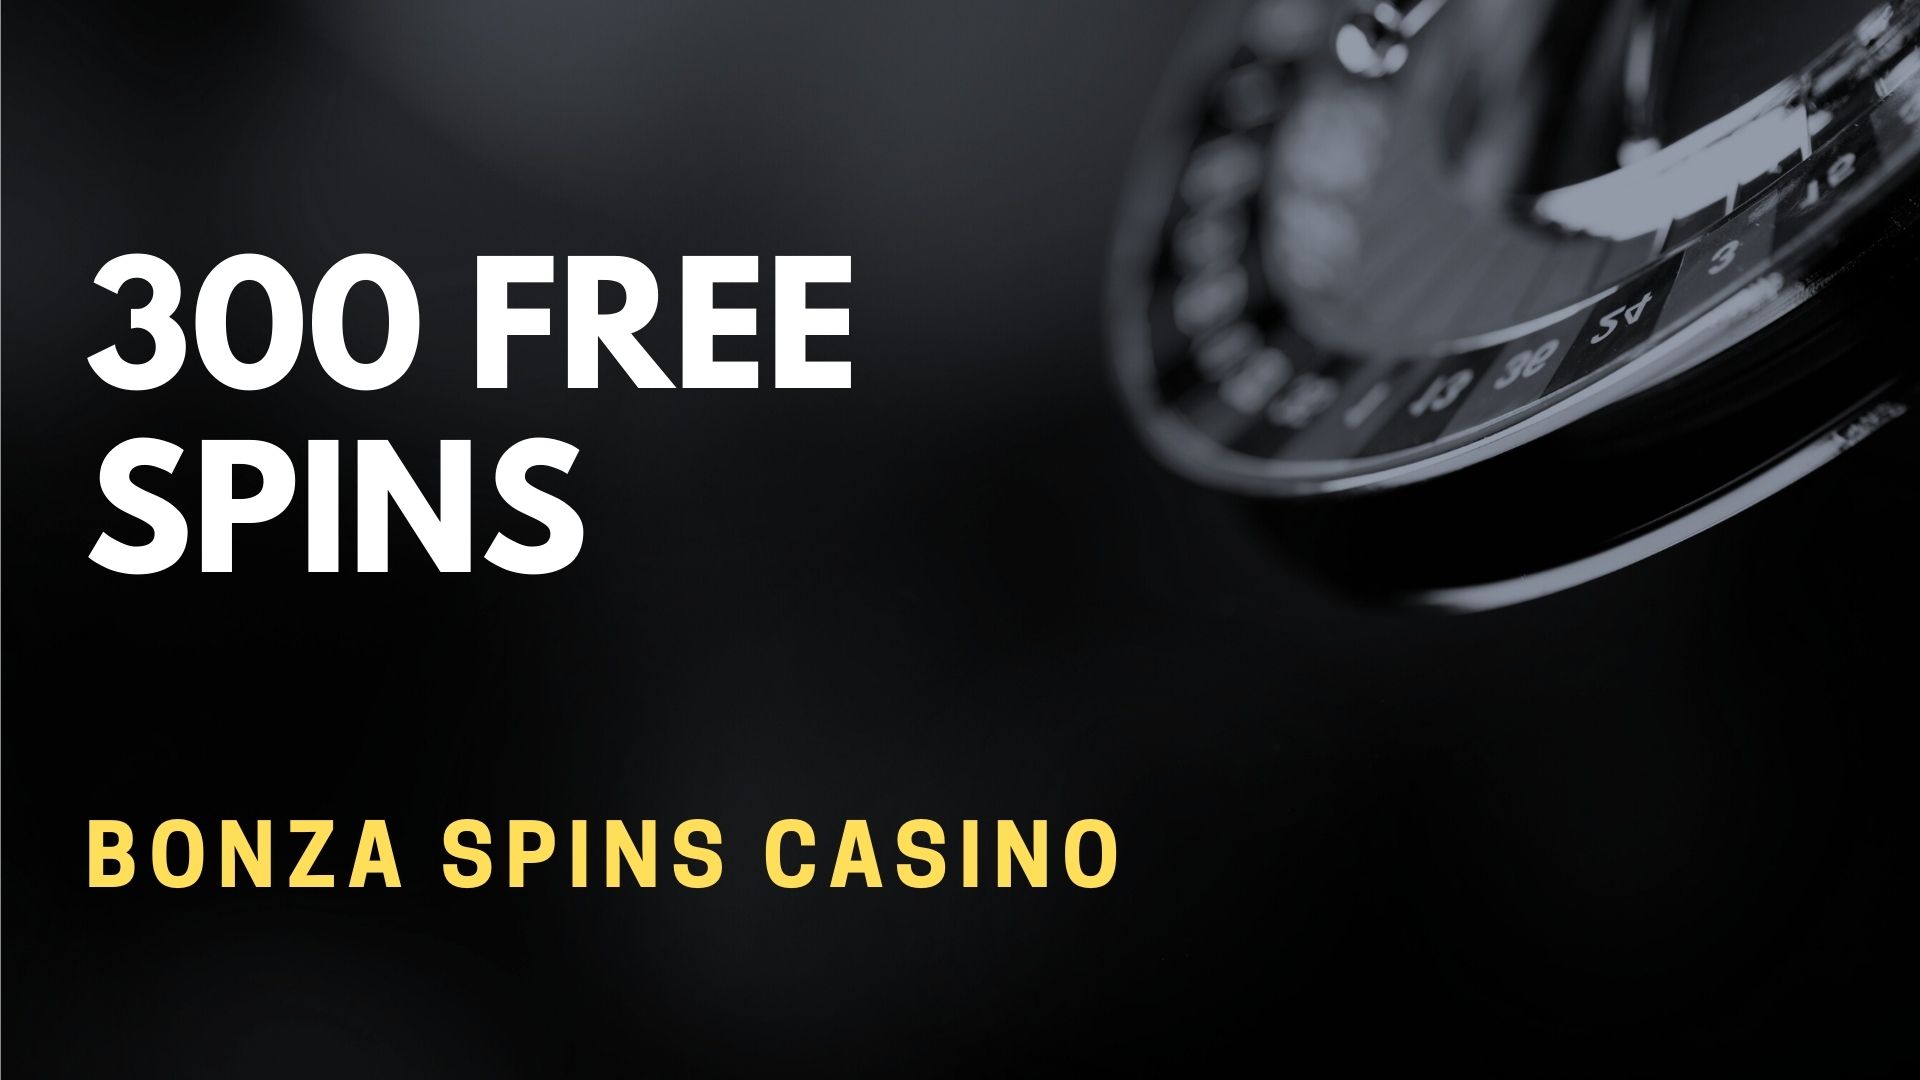 Club player casino no deposit codes 2018